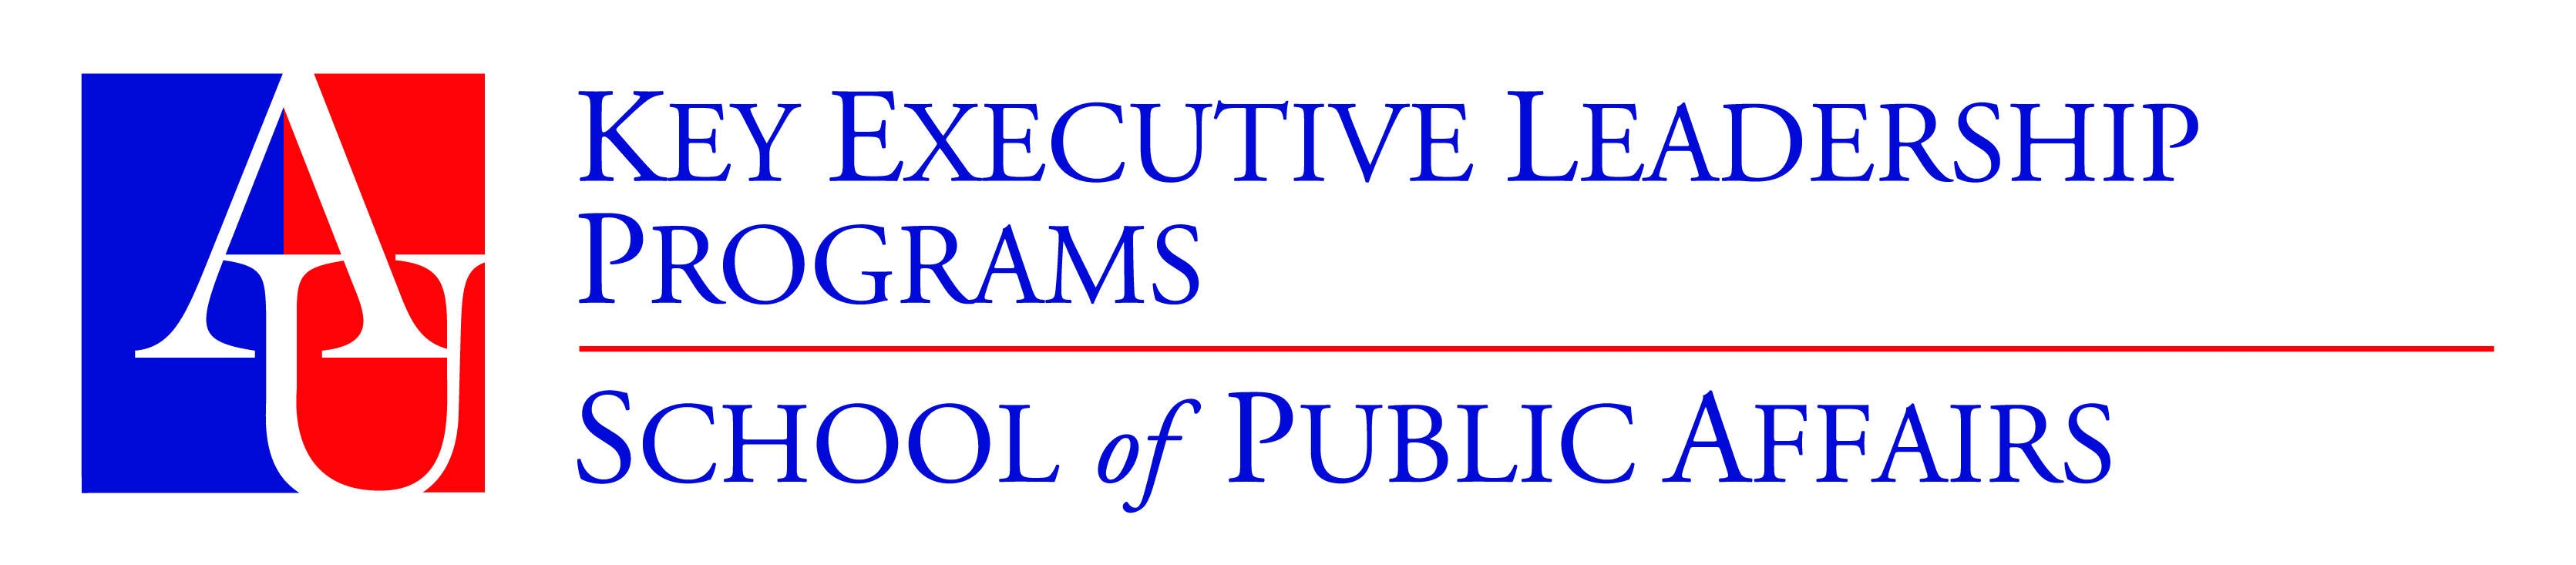 American University School Of Public Affairs Leadership Program